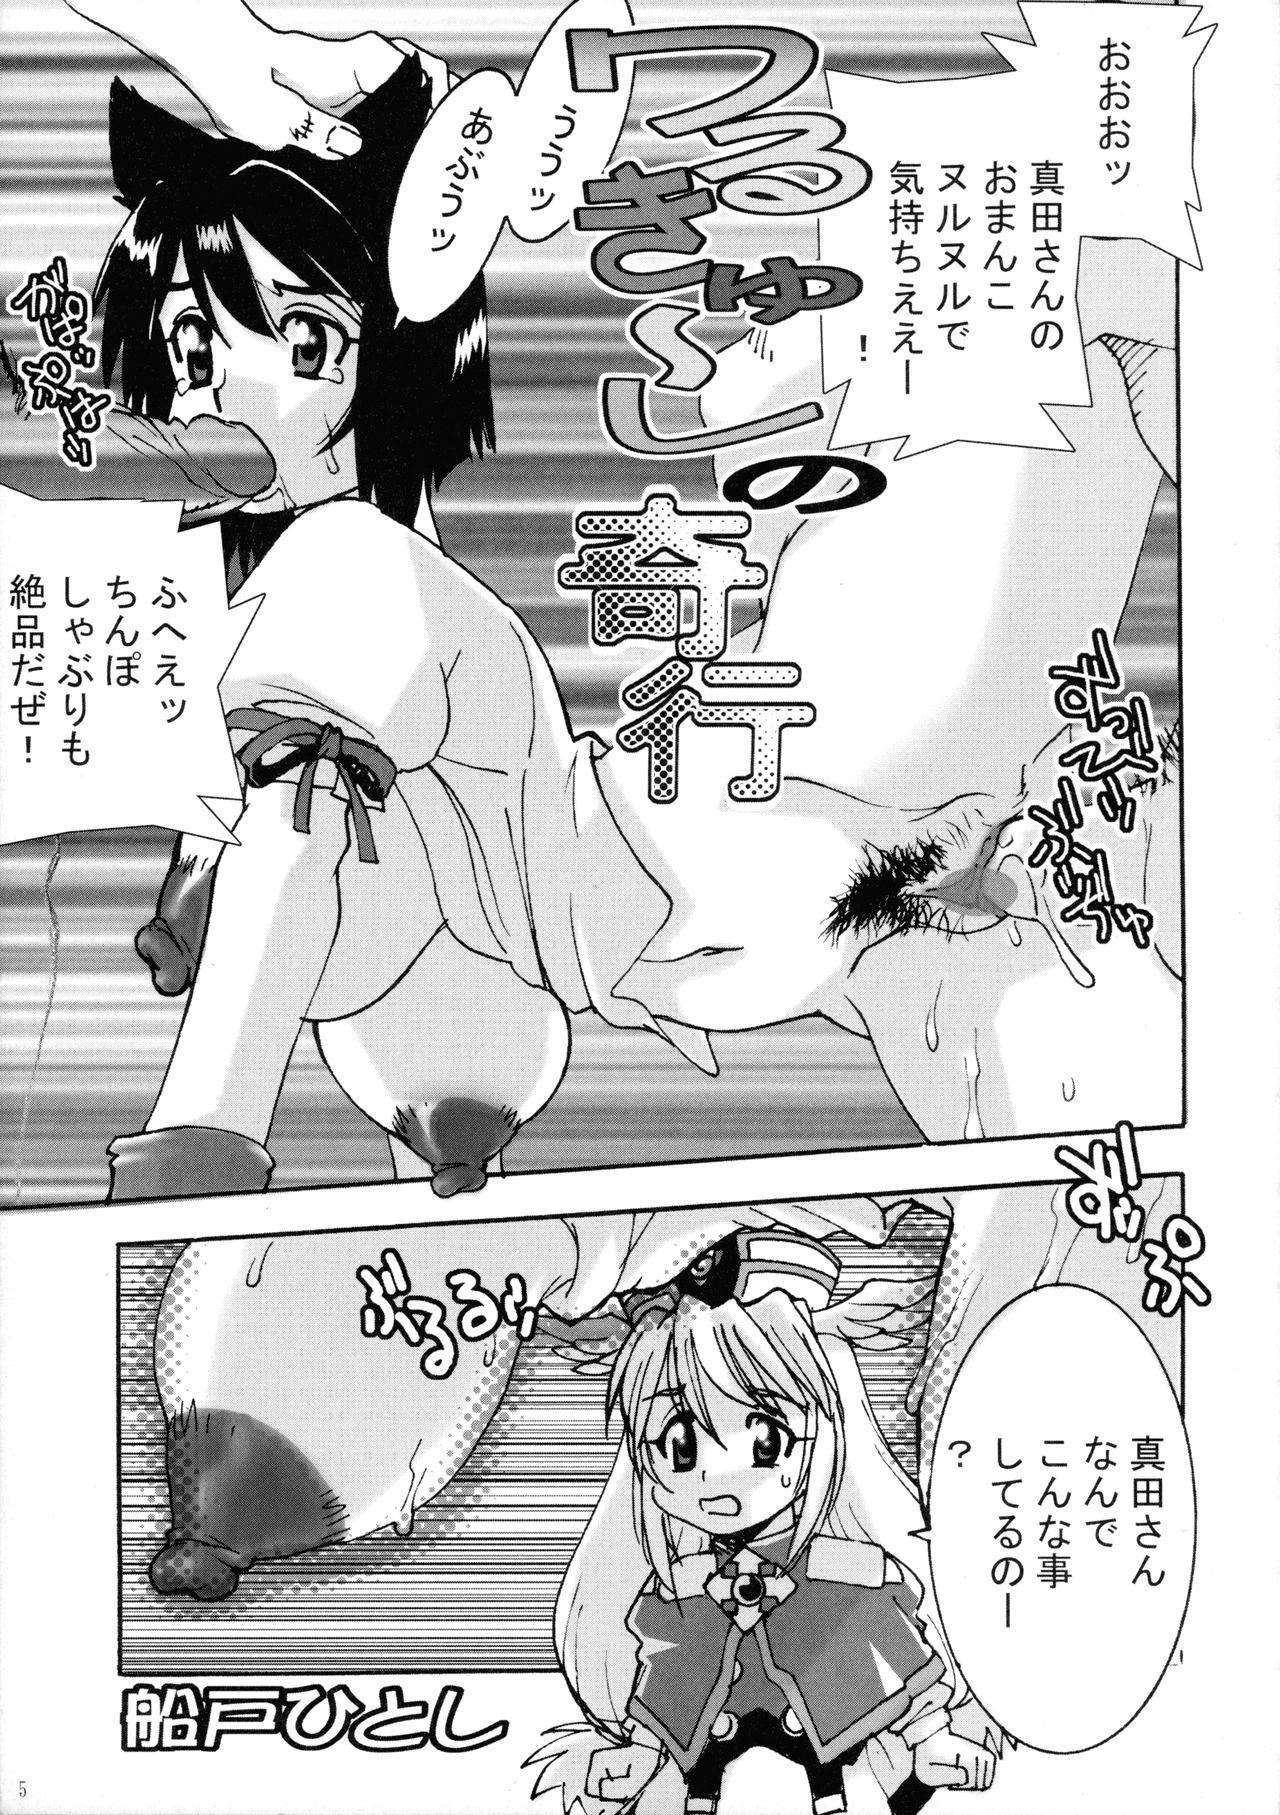 Buceta Shin Hanajuuroku VIII - Naruto One piece Bleach Kochikame Ufo princess valkyrie Public Nudity - Page 5